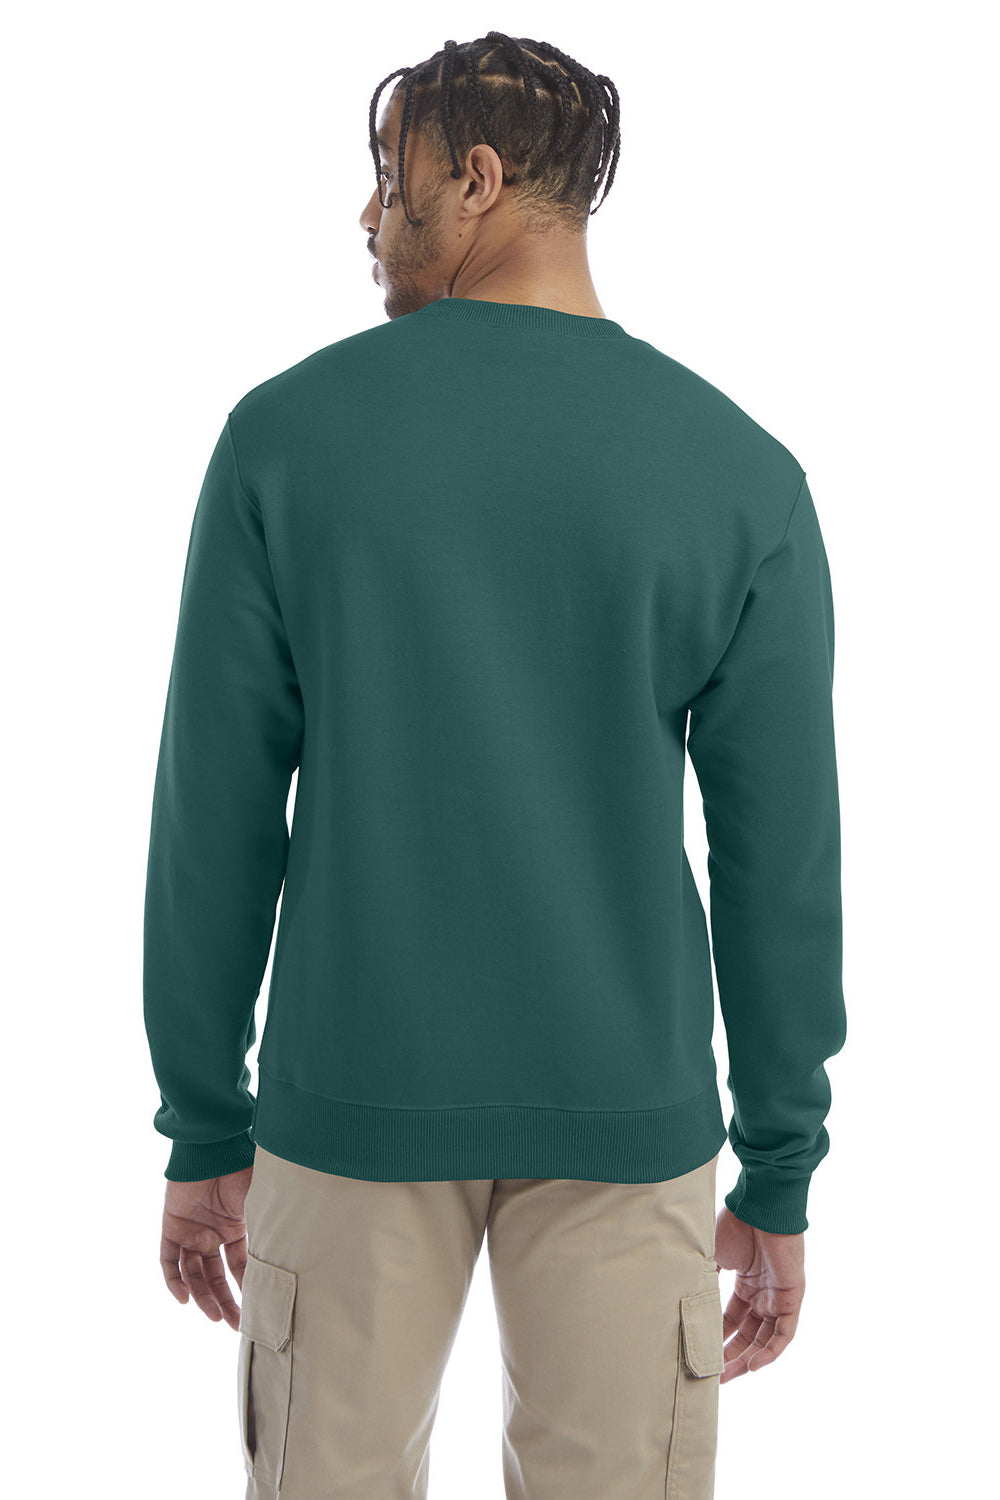 Champion S6000/S600 Mens Double Dry Eco Moisture Wicking Fleece Crewneck Sweatshirt Emerald Green Back